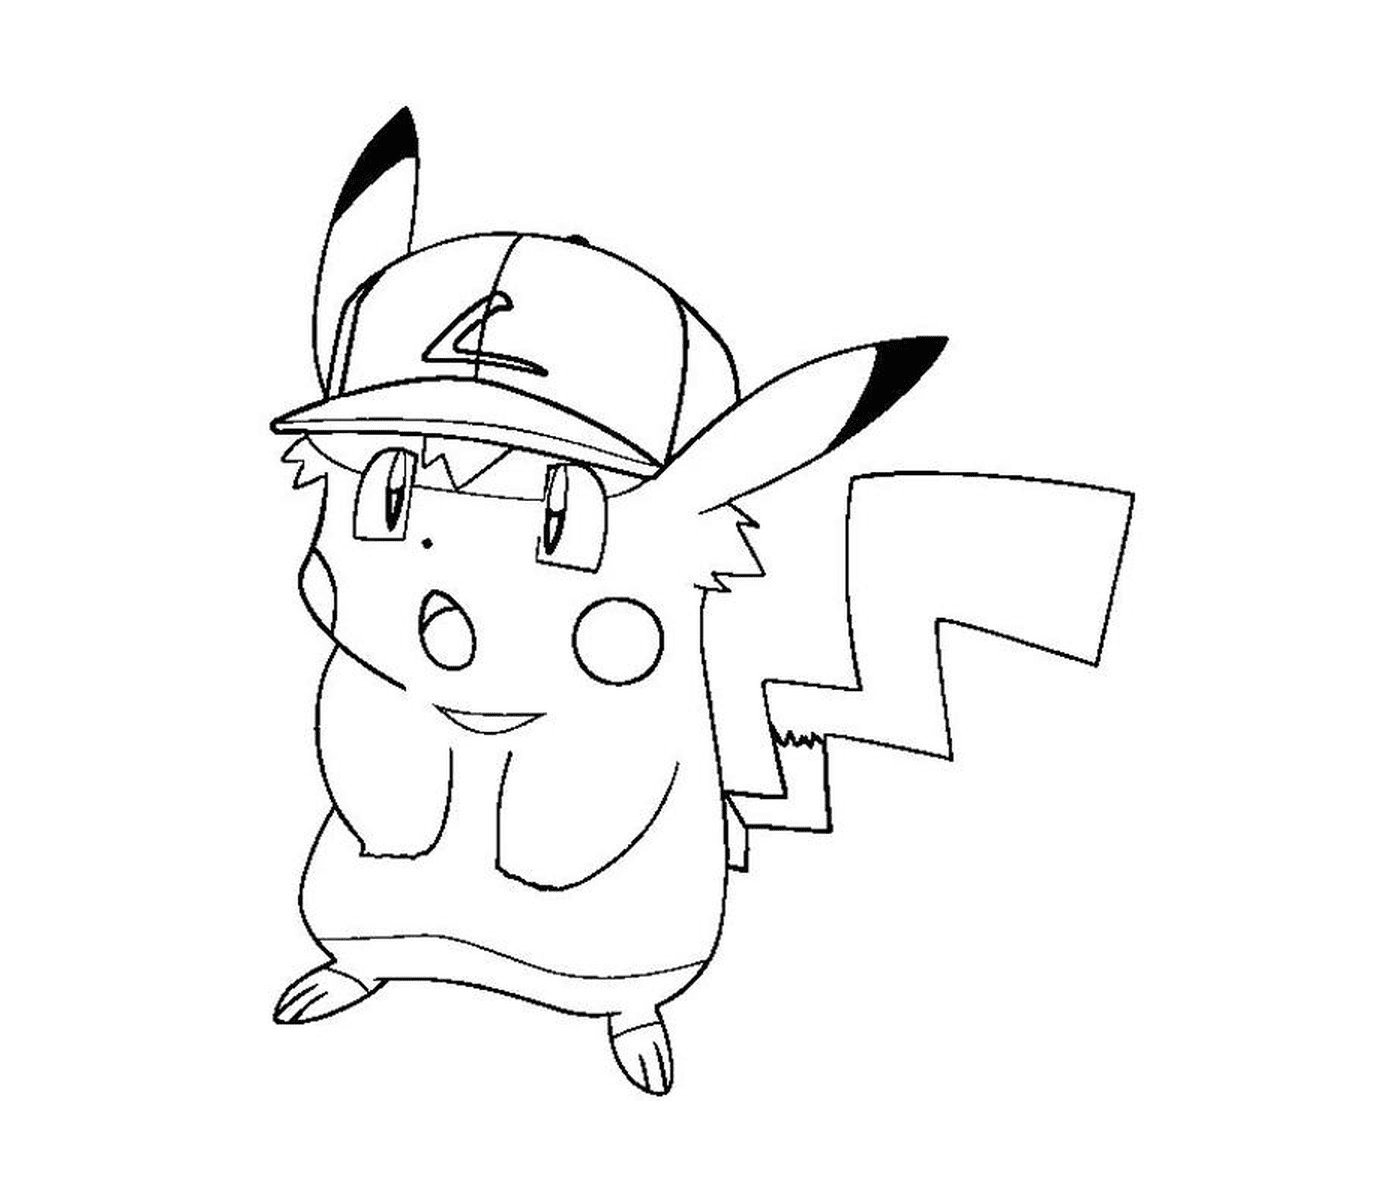  Pikachu stylized with a cap 